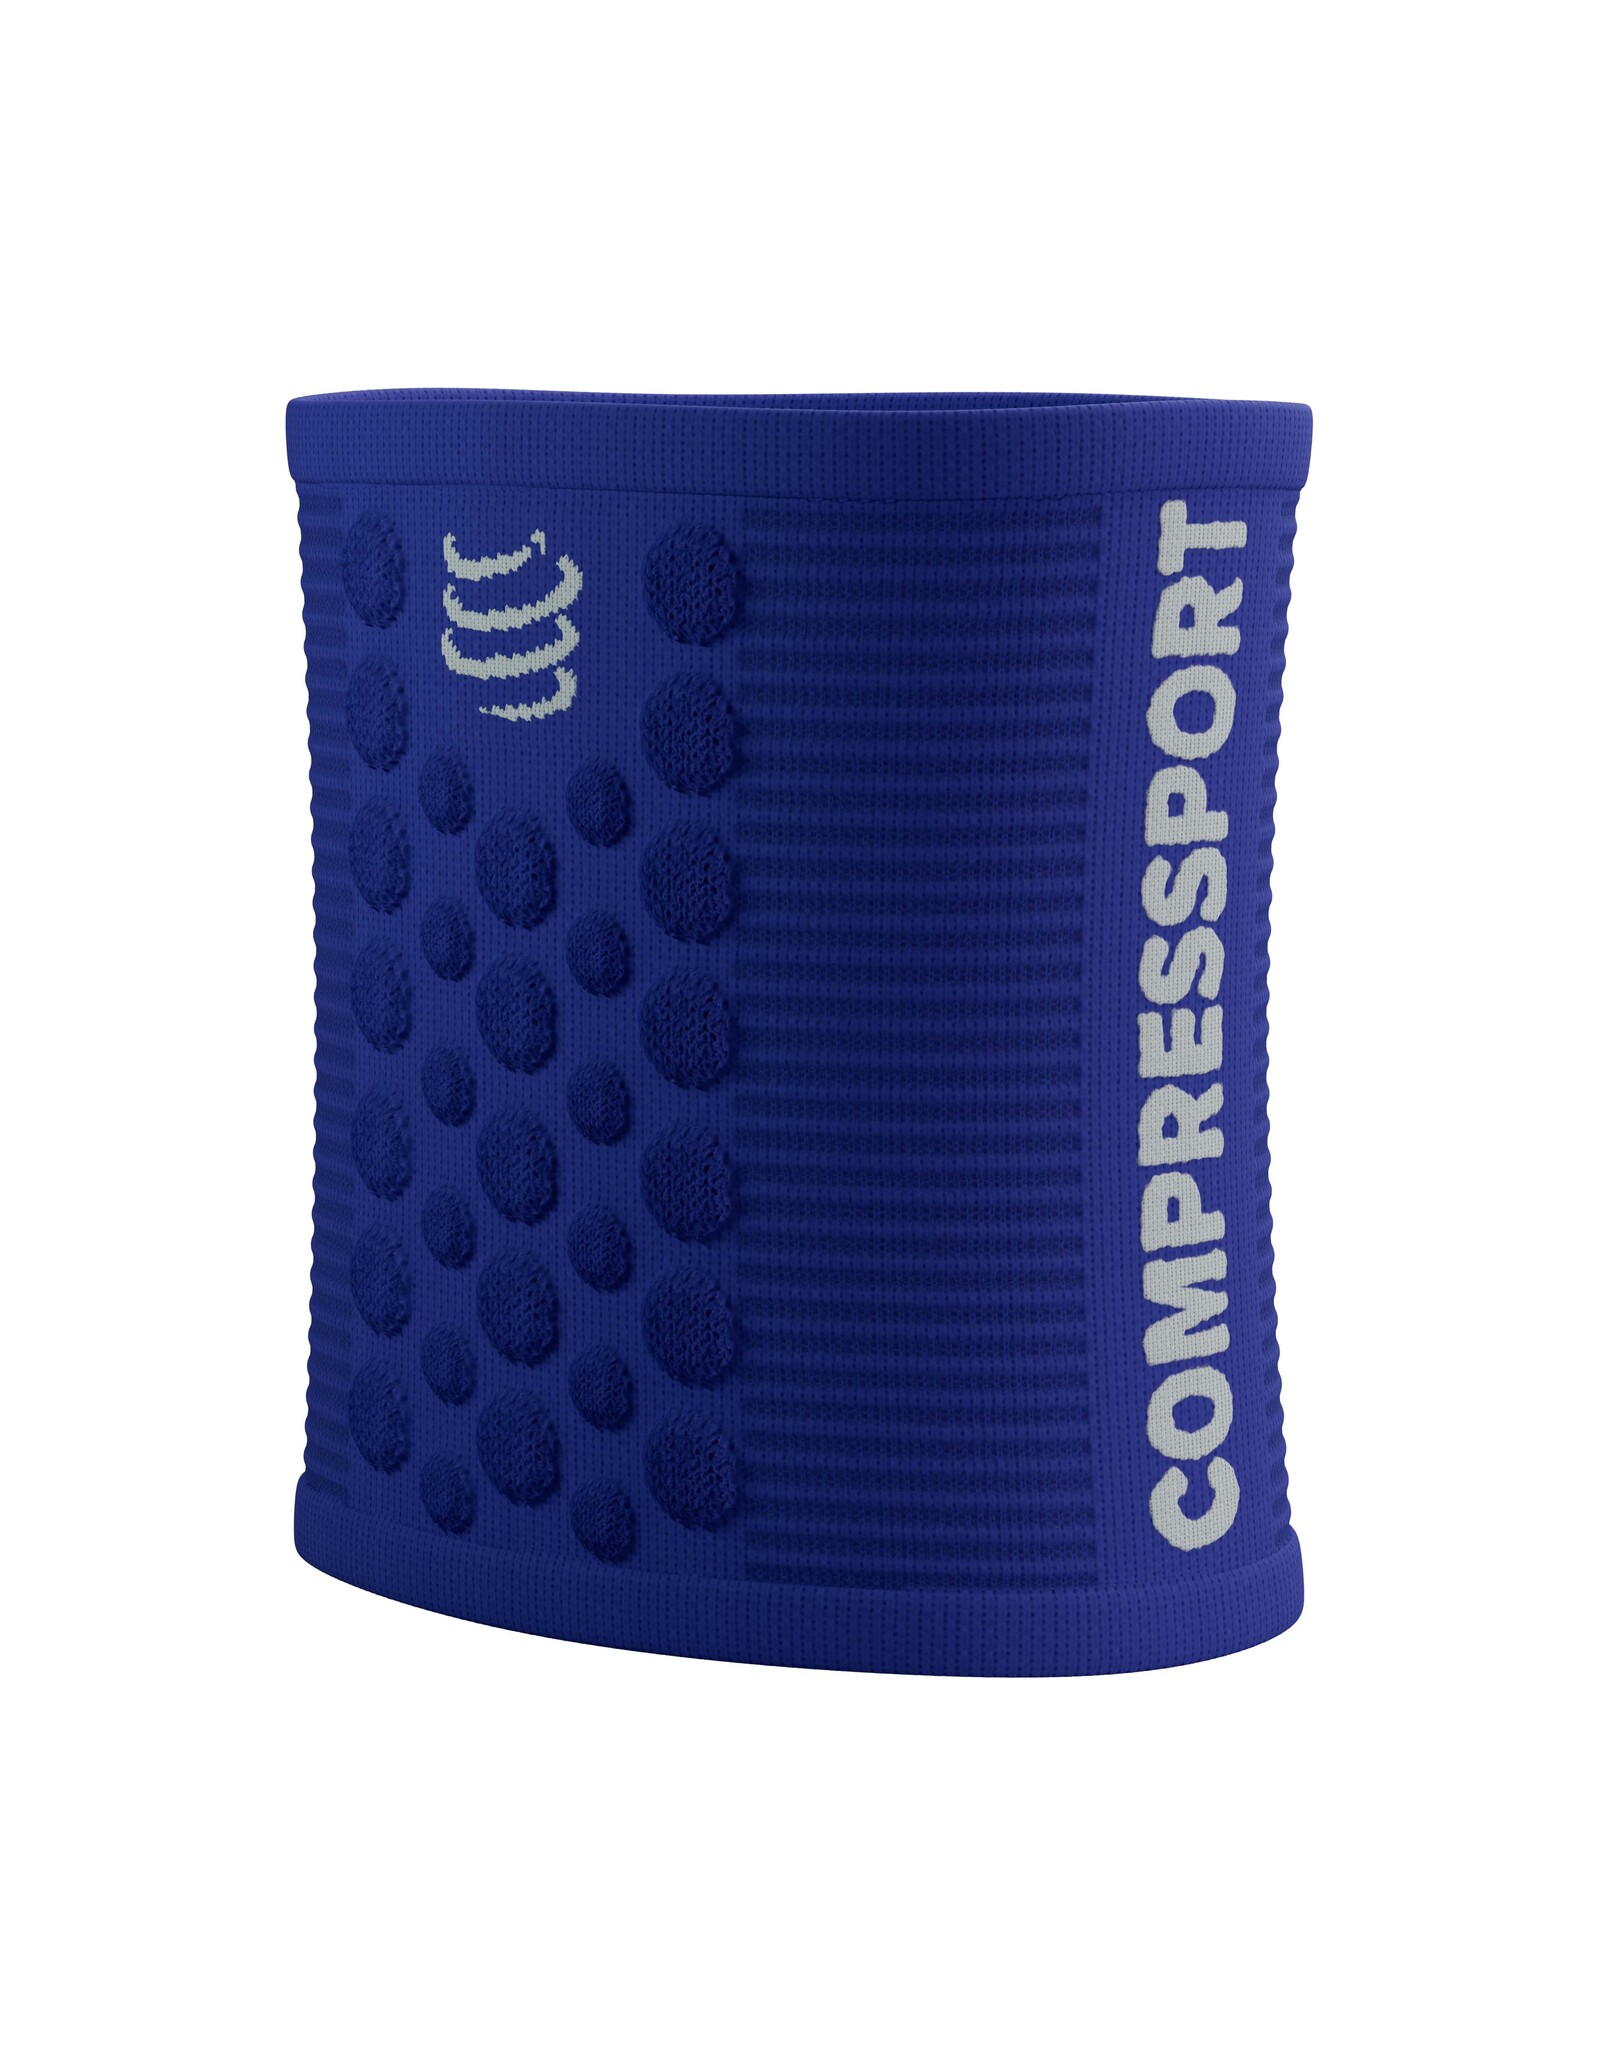 Compressport Sweatbands 3D.Dots - Dazzling Blue/White